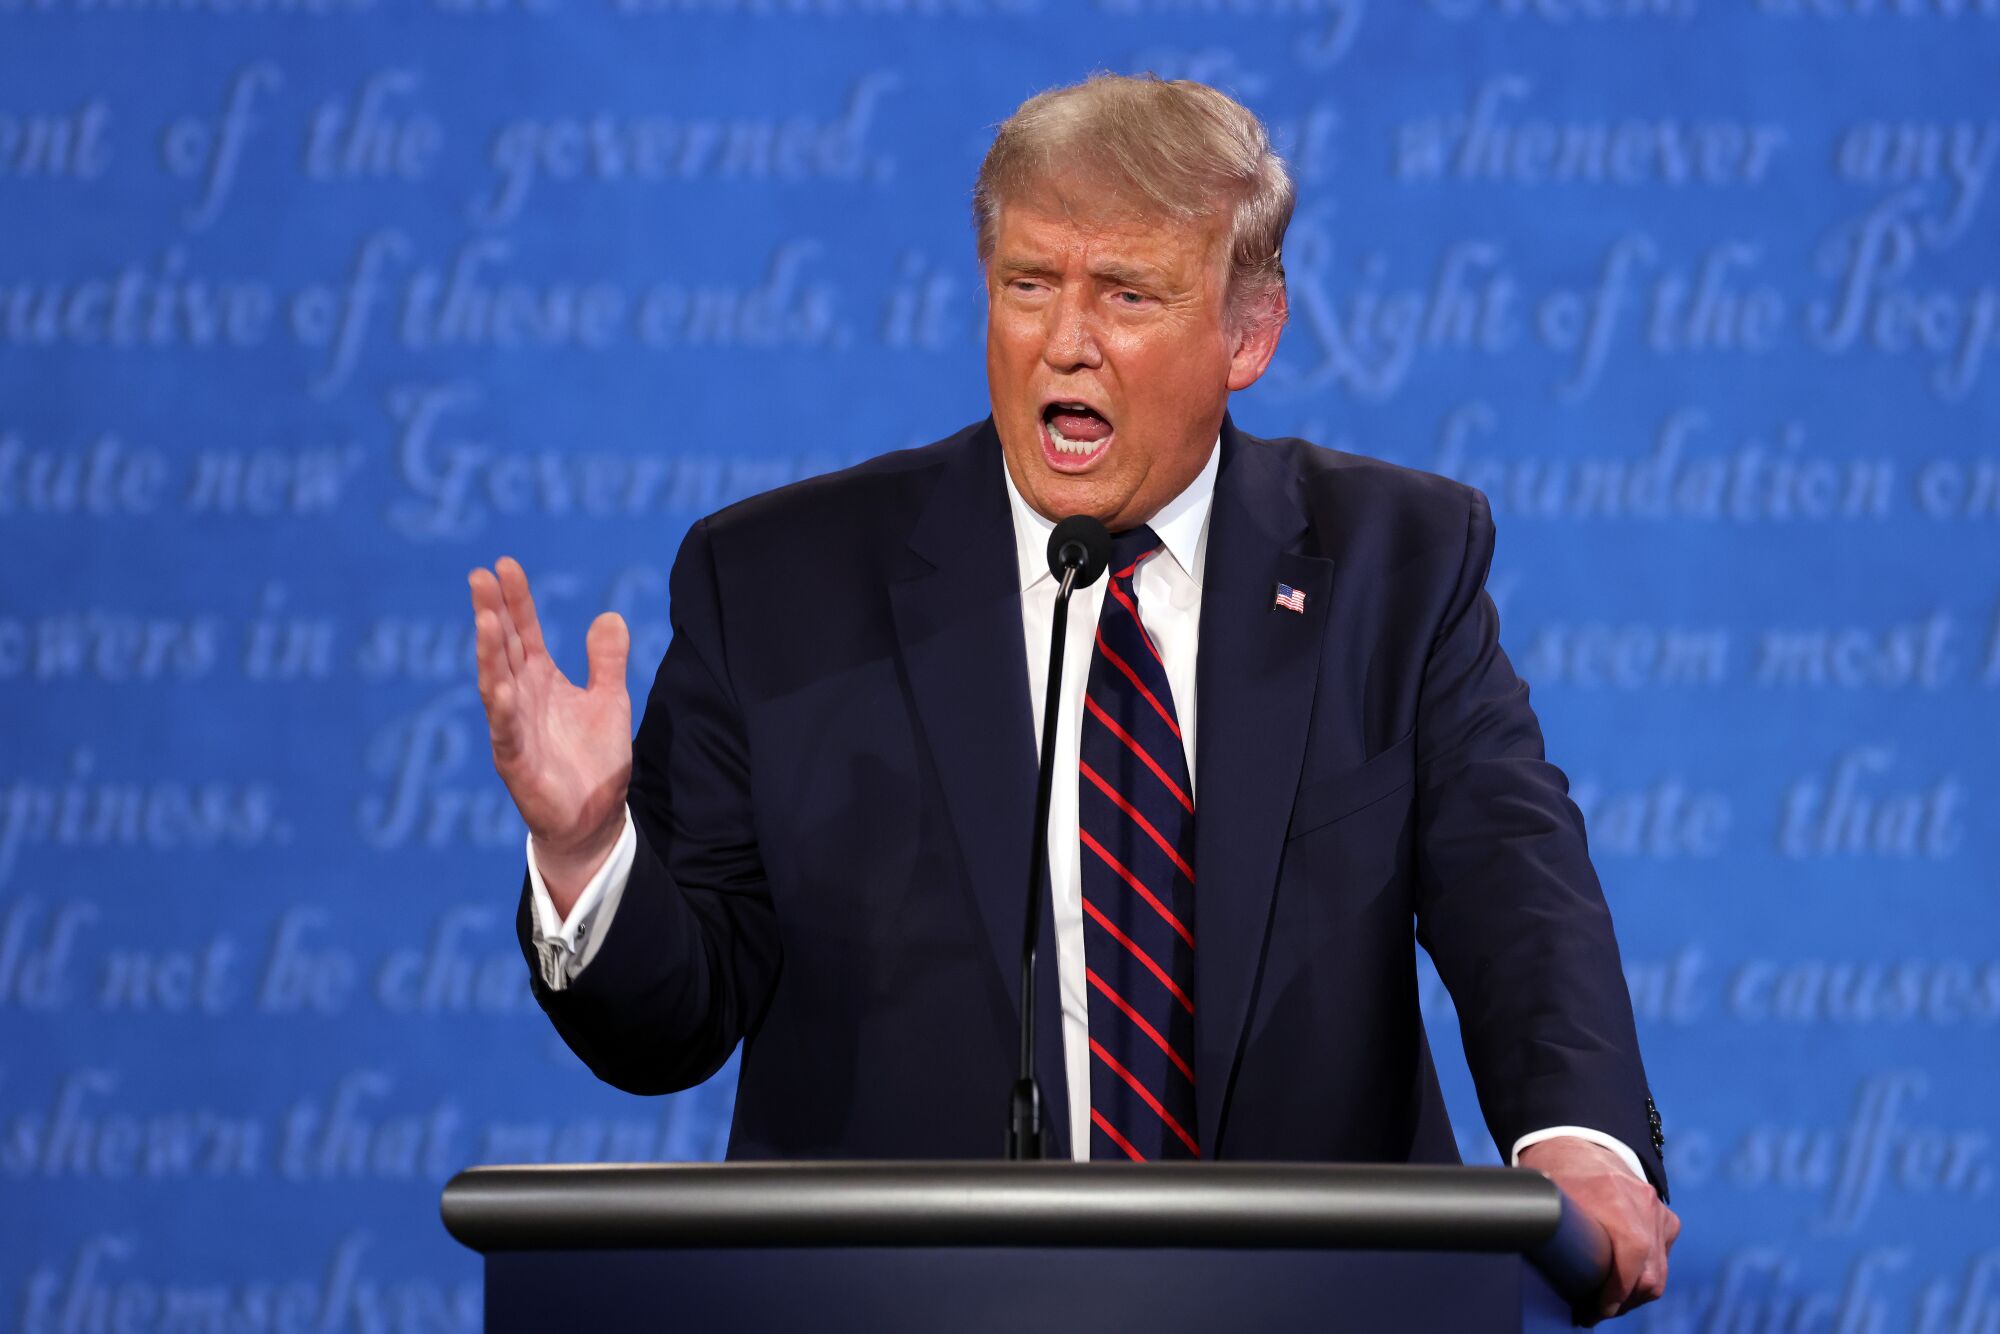 Donald Trump speaks during a debate